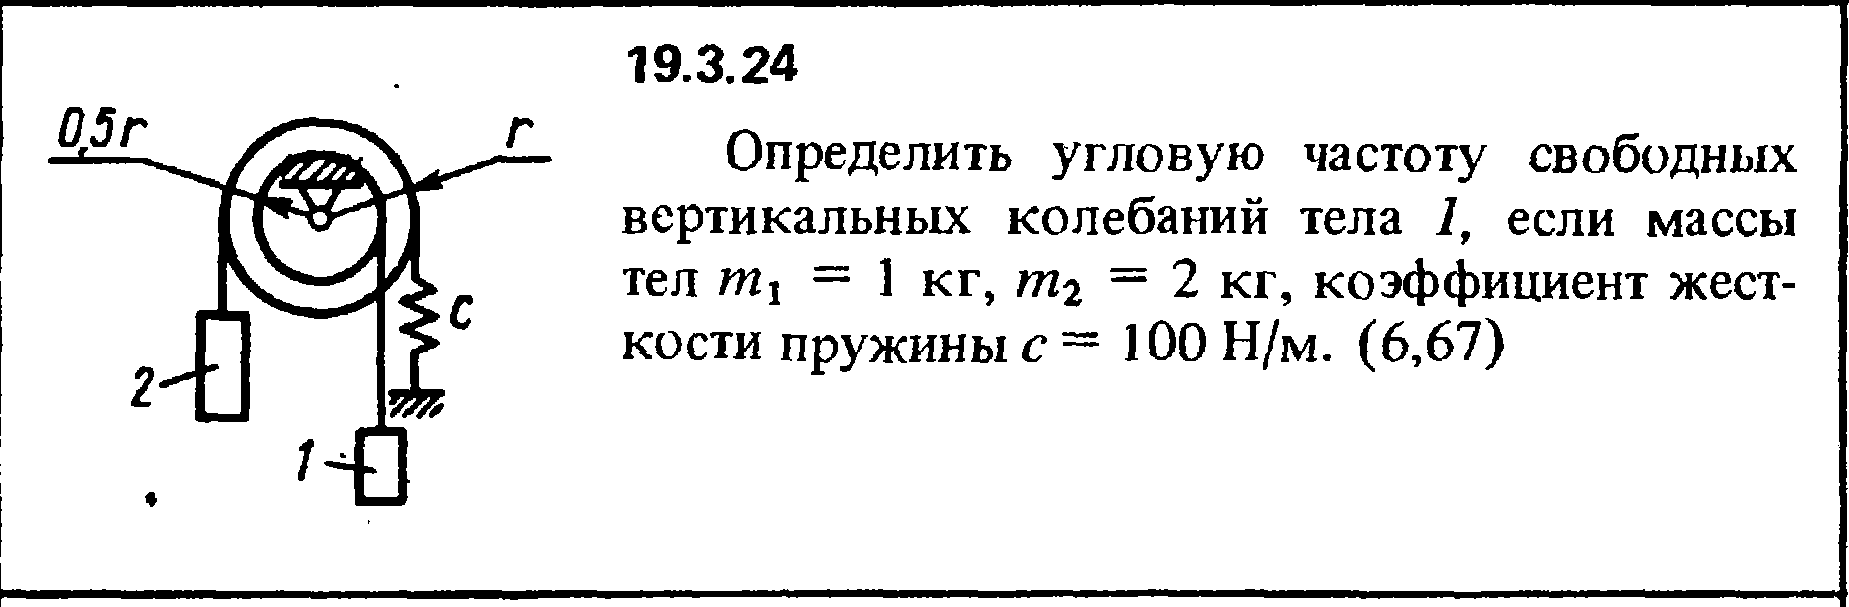 Решение 19.3.24 из сборника (решебника) Кепе О.Е. 1989